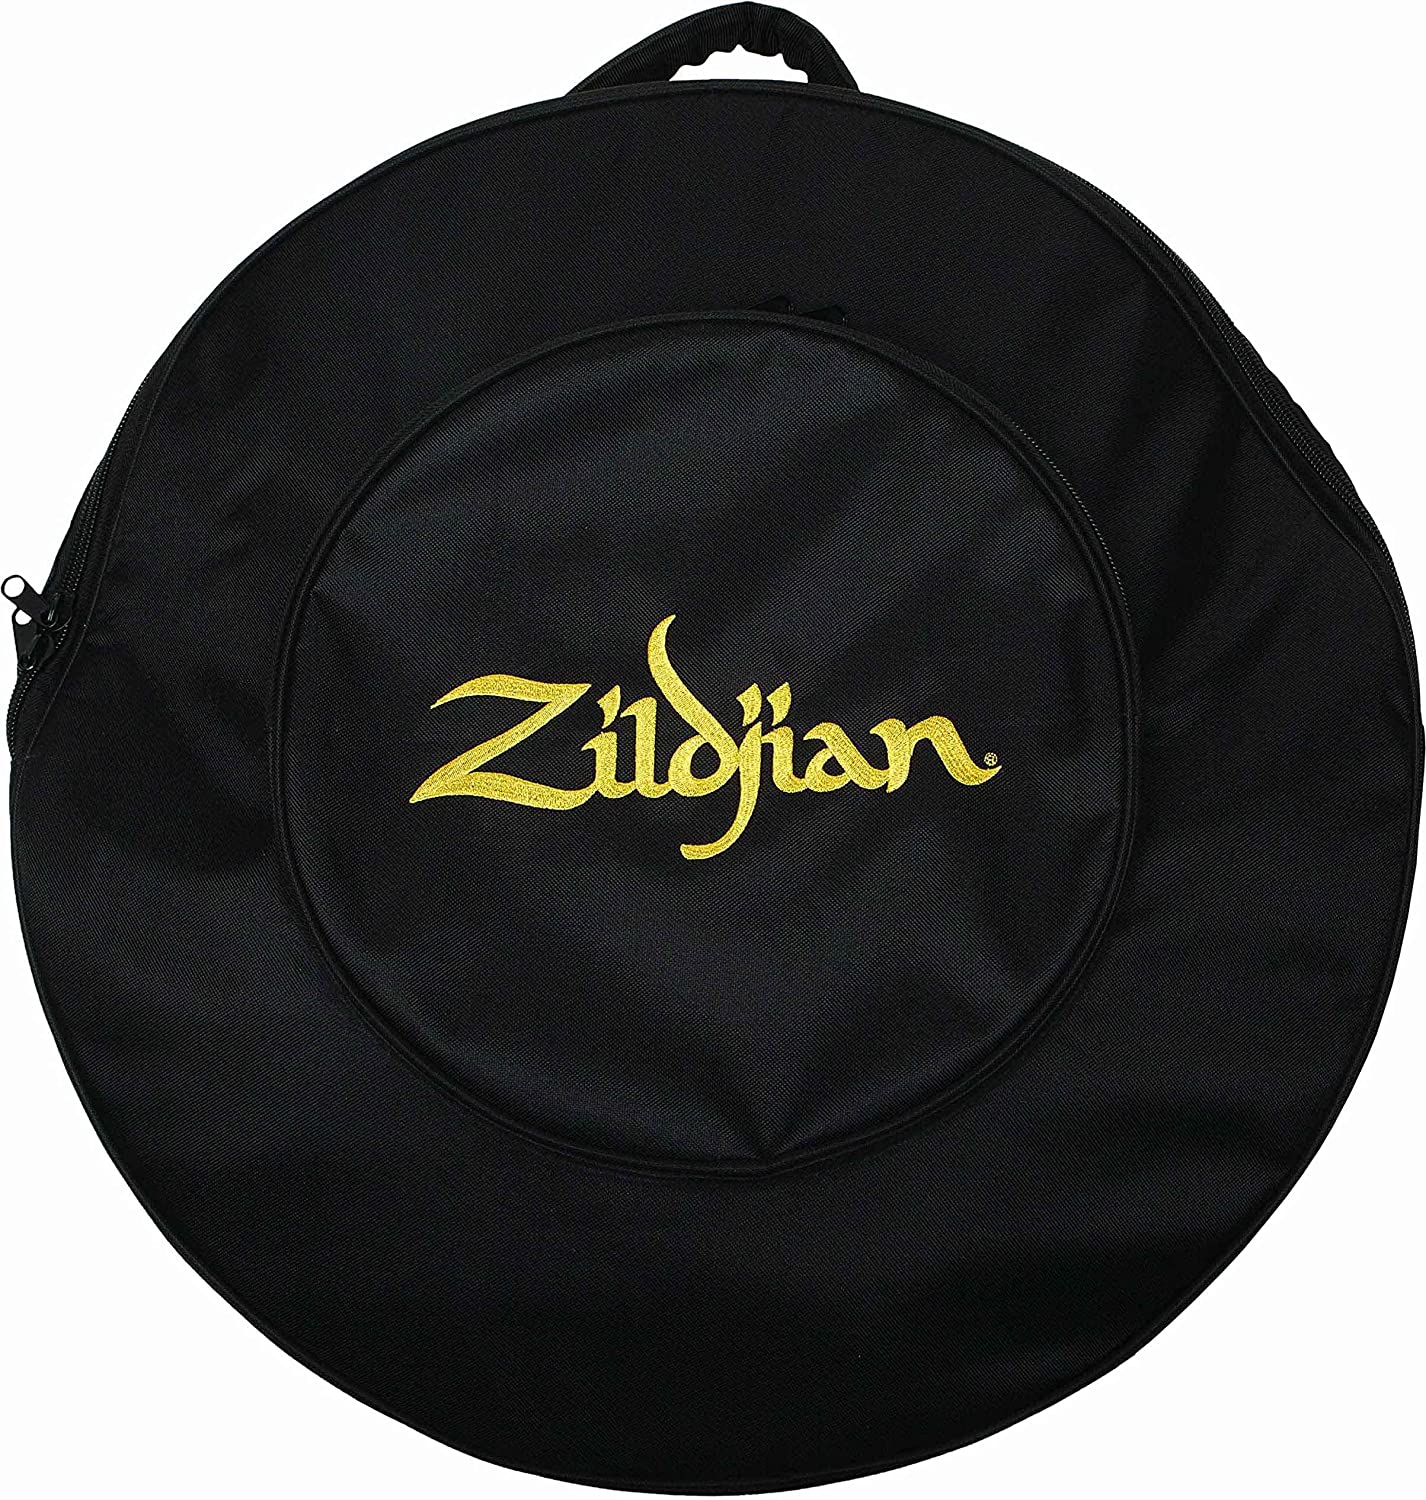 Zildjian K0801C Country Music Pack